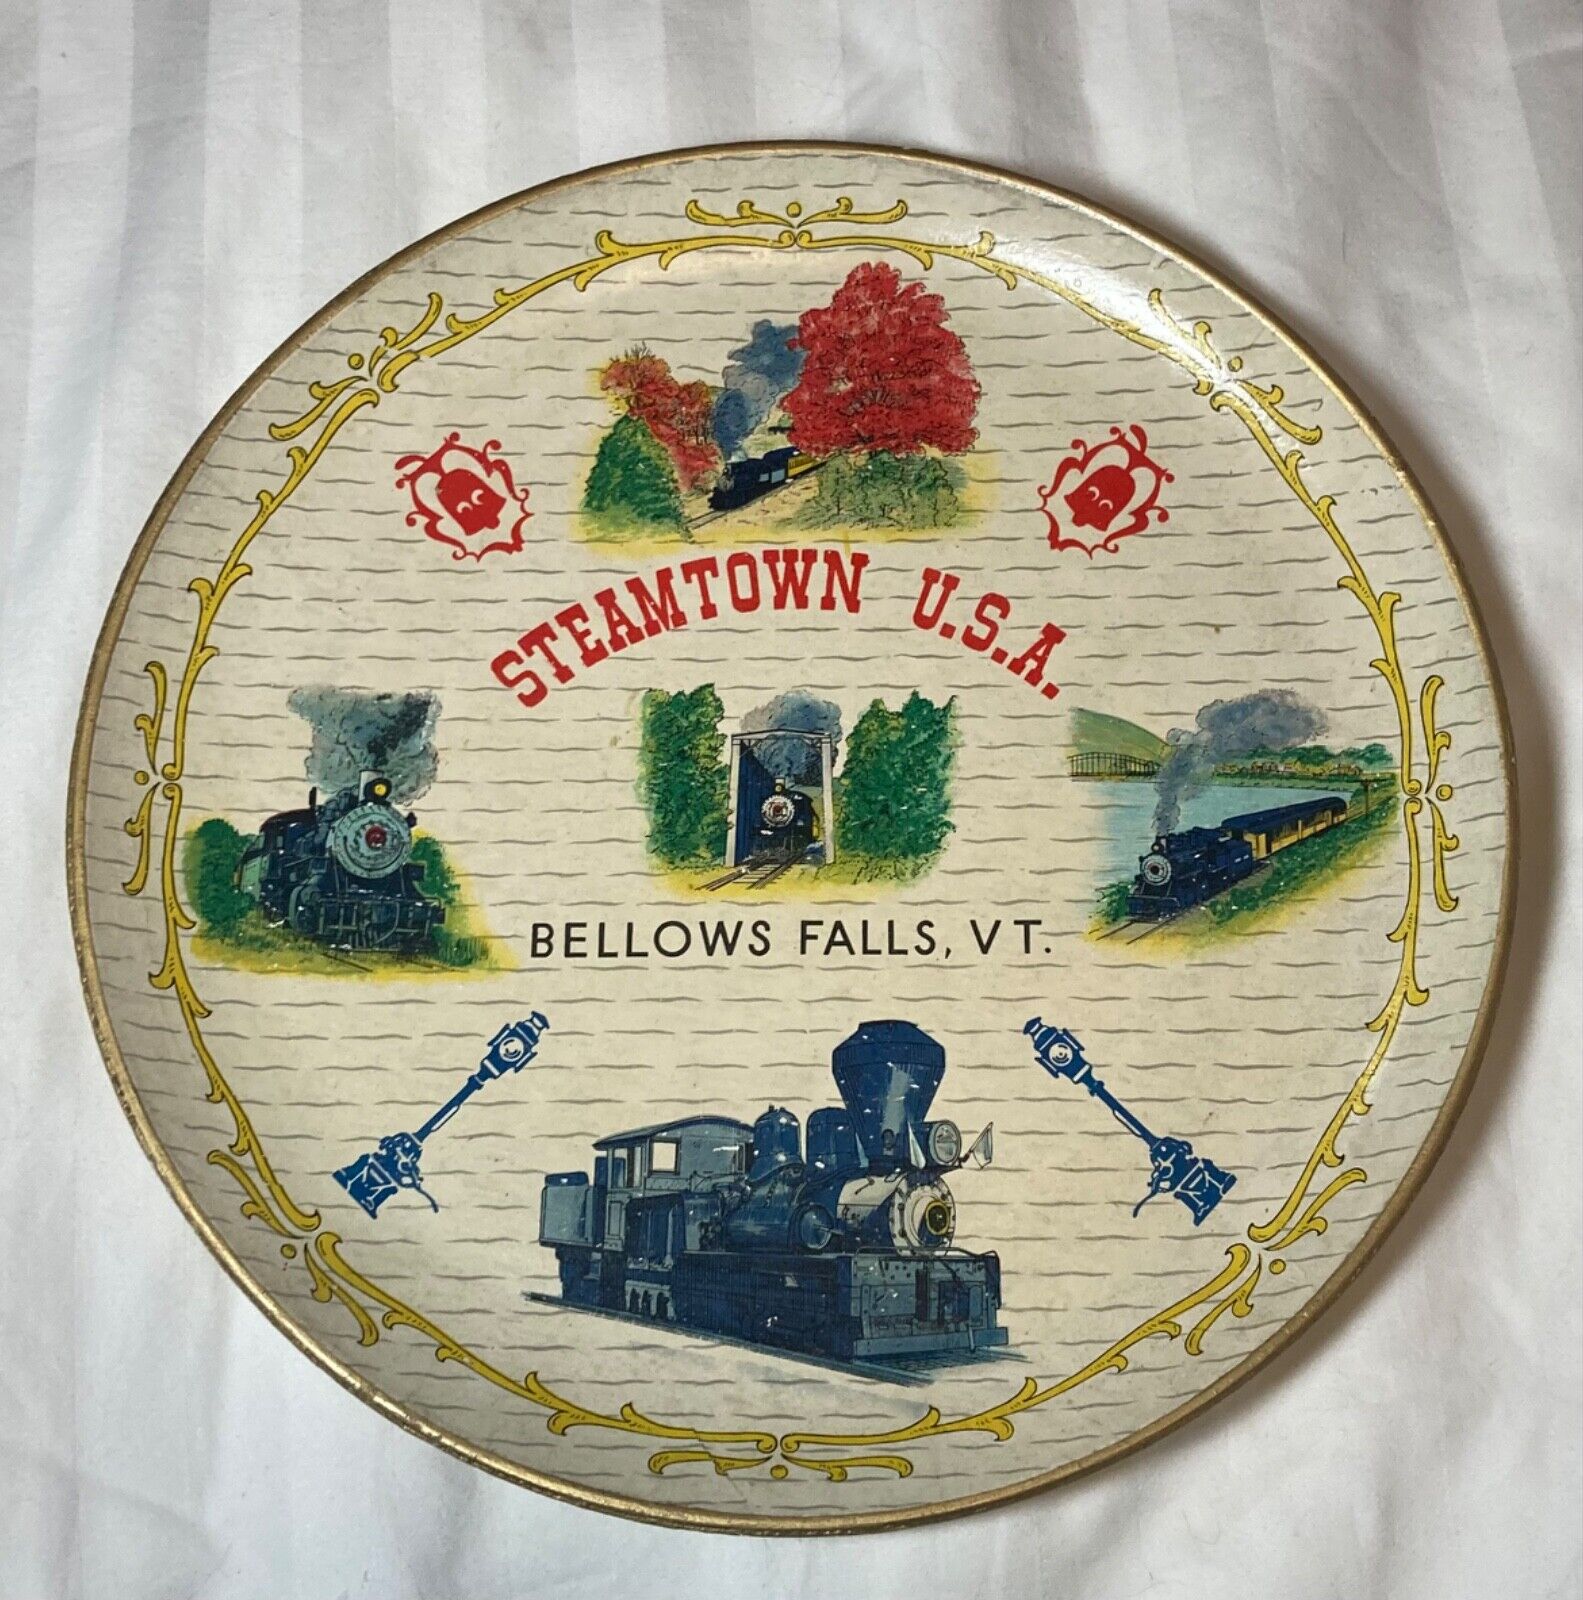 Vintage Steamtown USA Bellows Falls VT Souvenir Plate  Trains 11 Inches Across